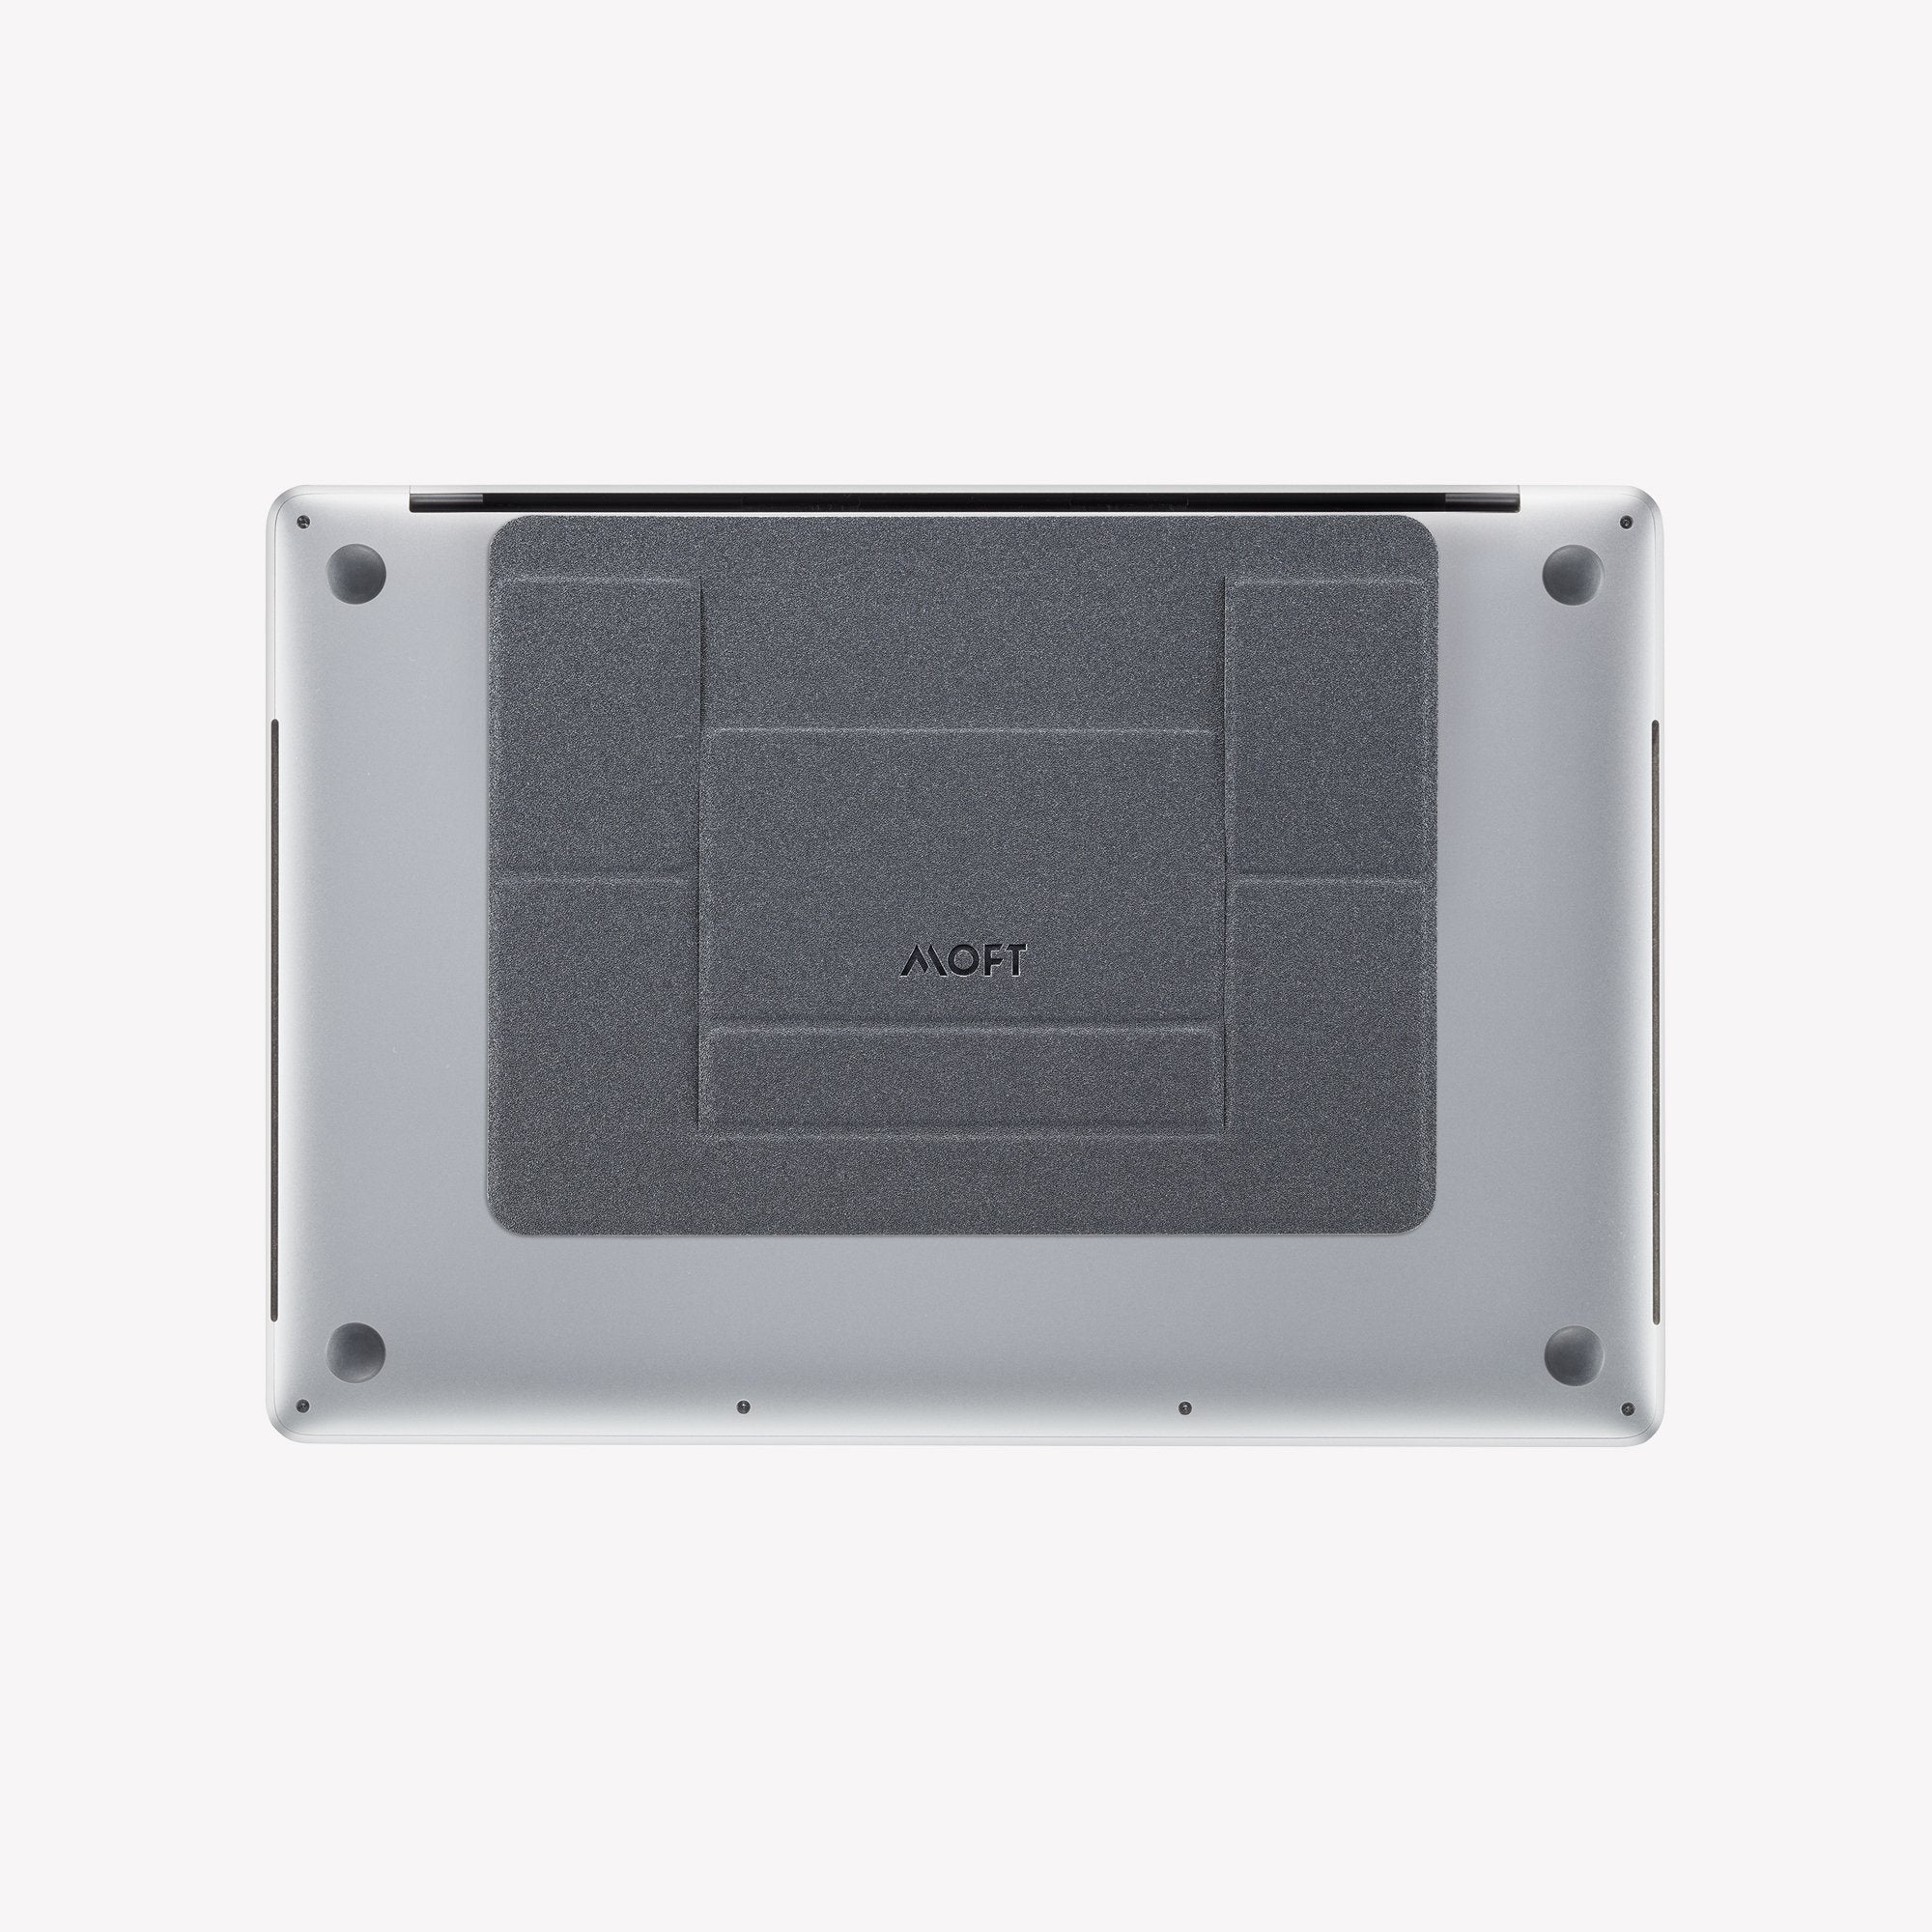 2 Adhesive Laptop Stand Combo – MOFT